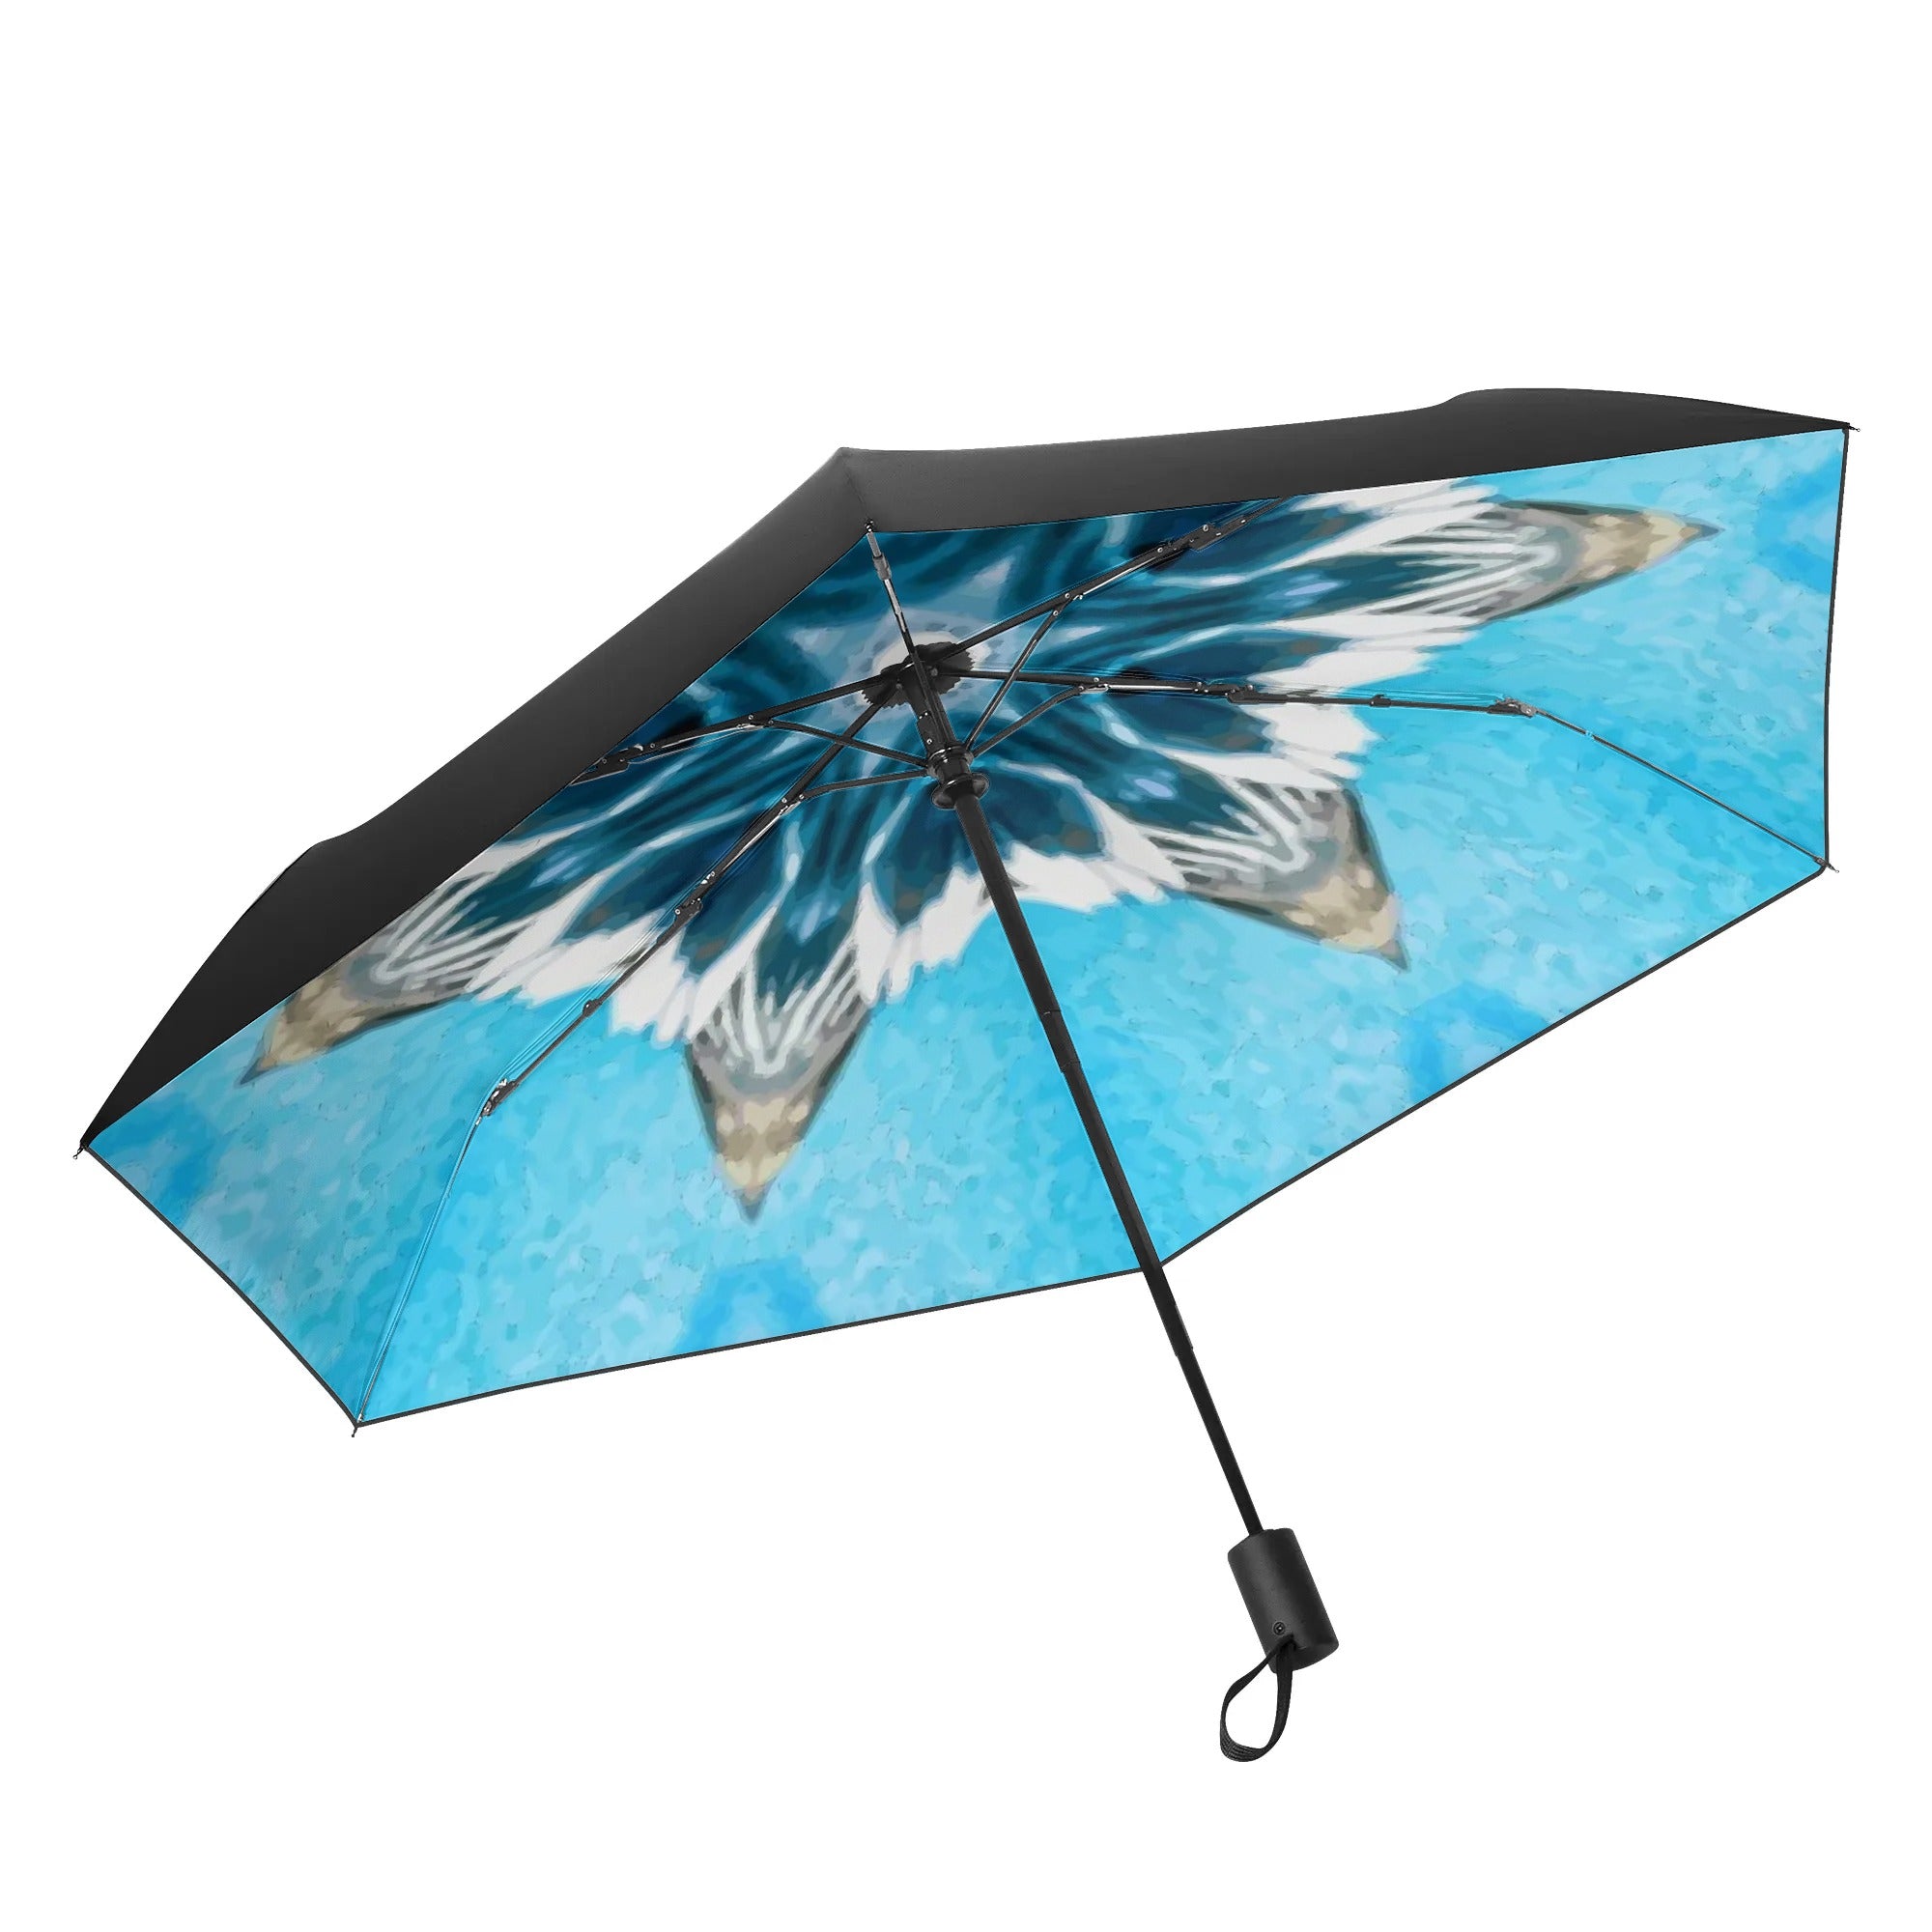 Blue Diamond Fully Automatic Umbrella with Design Inside